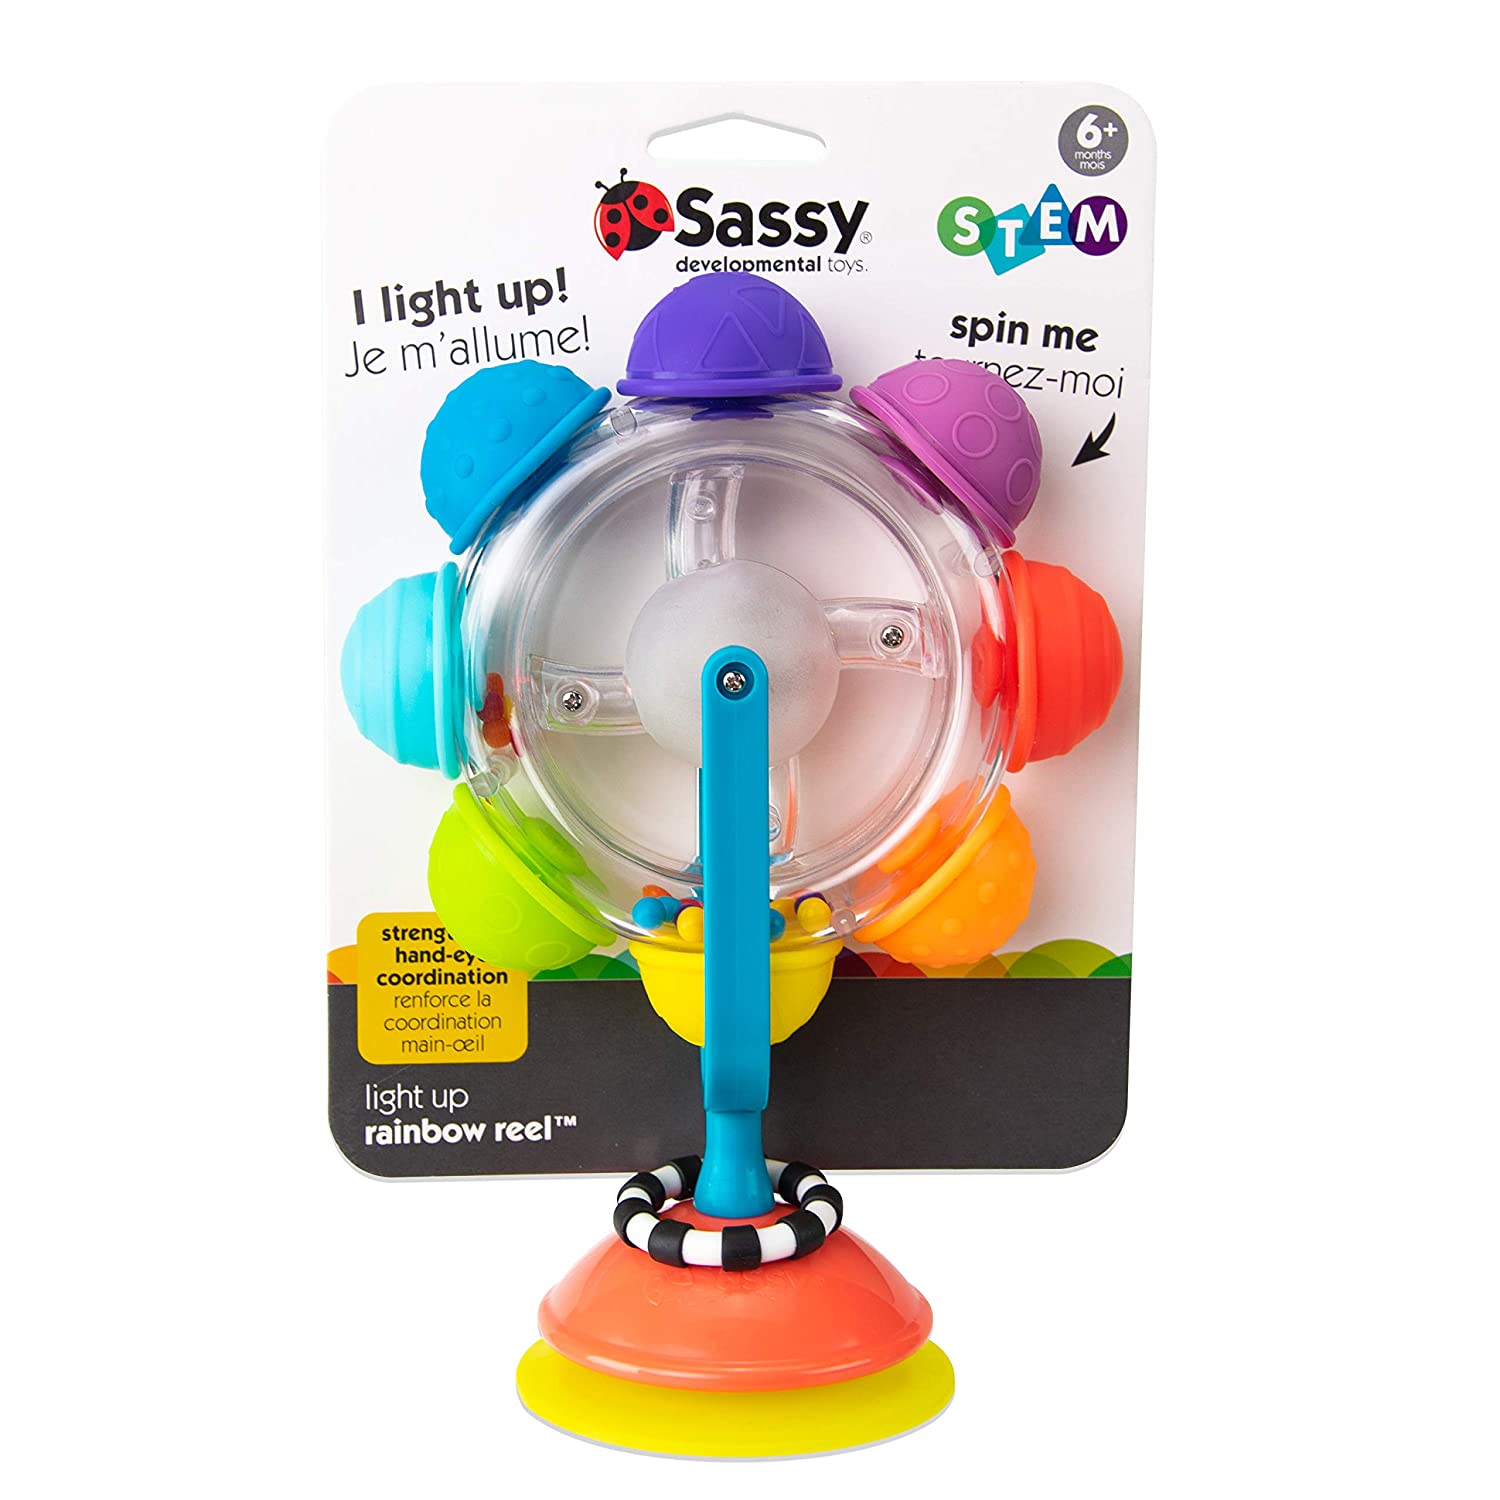 are sassy toys bpa free, SAVE 41% 